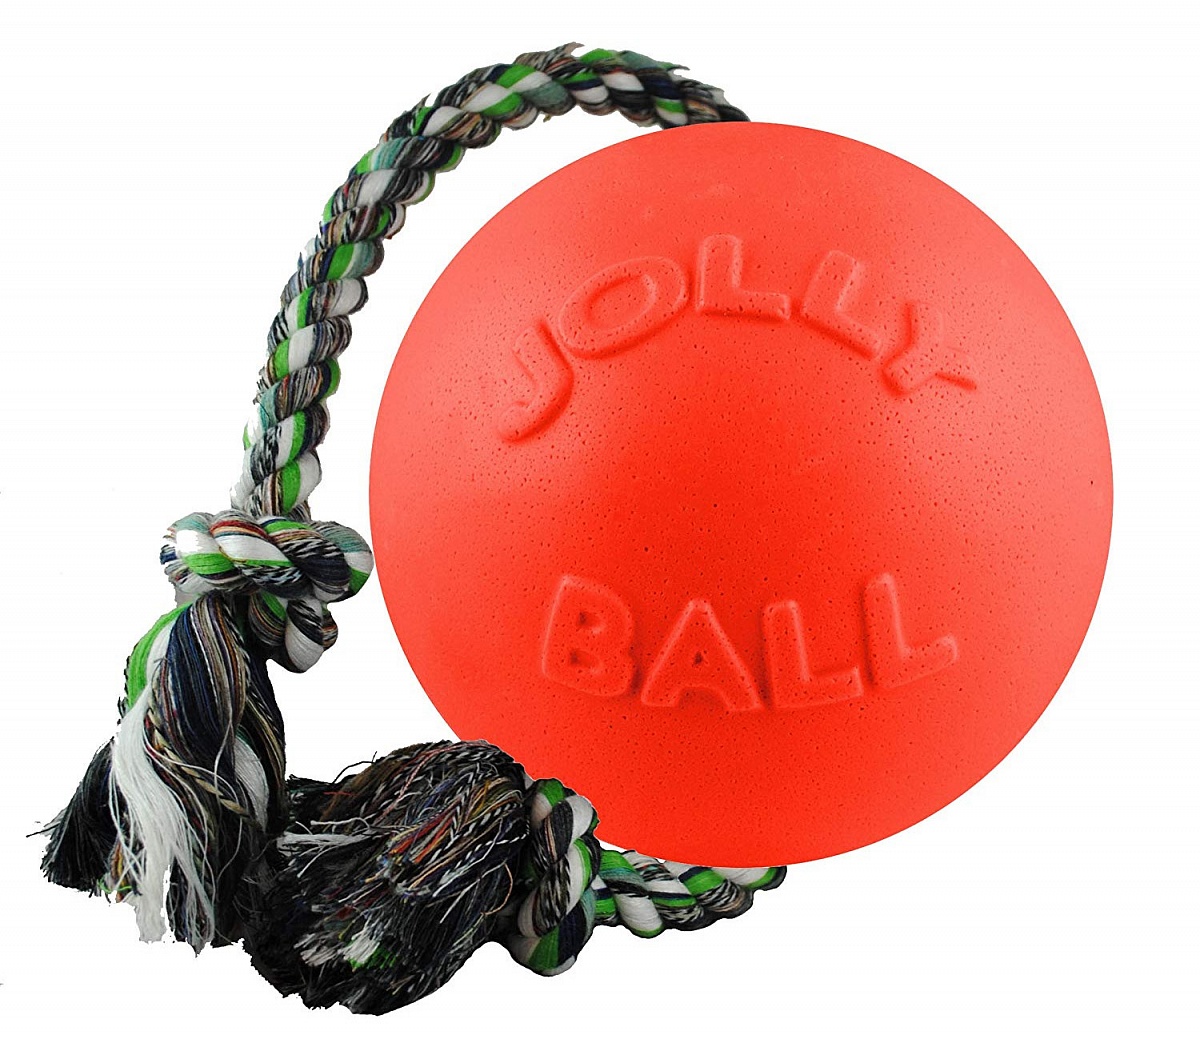     Jolly Ball-on-a-Rope HVP ()